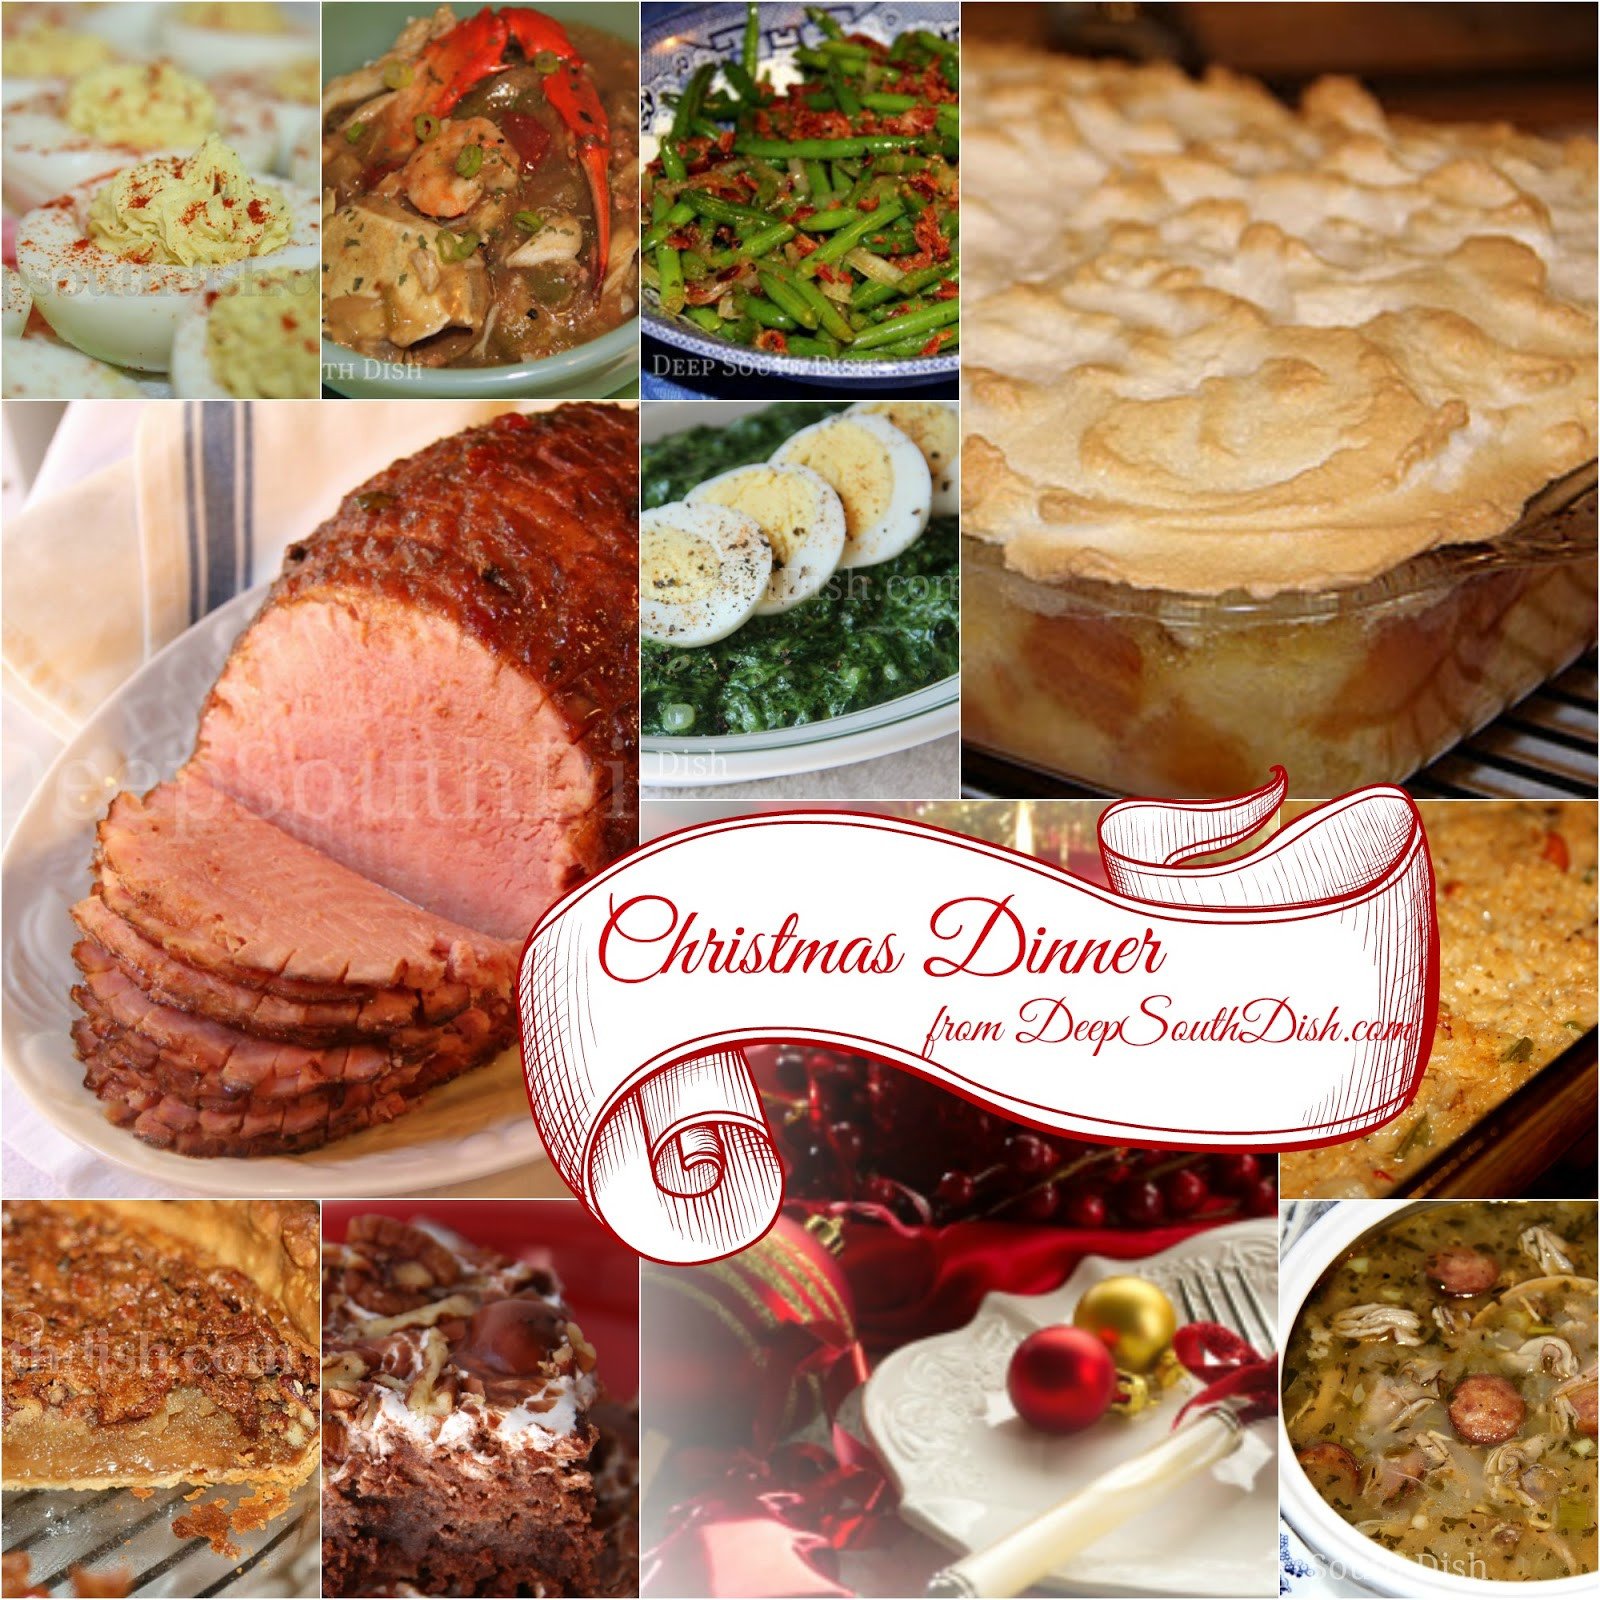 Soul Food Christmas Dinner Menu
 Deep South Dish Southern Christmas Dinner Menu and Recipe